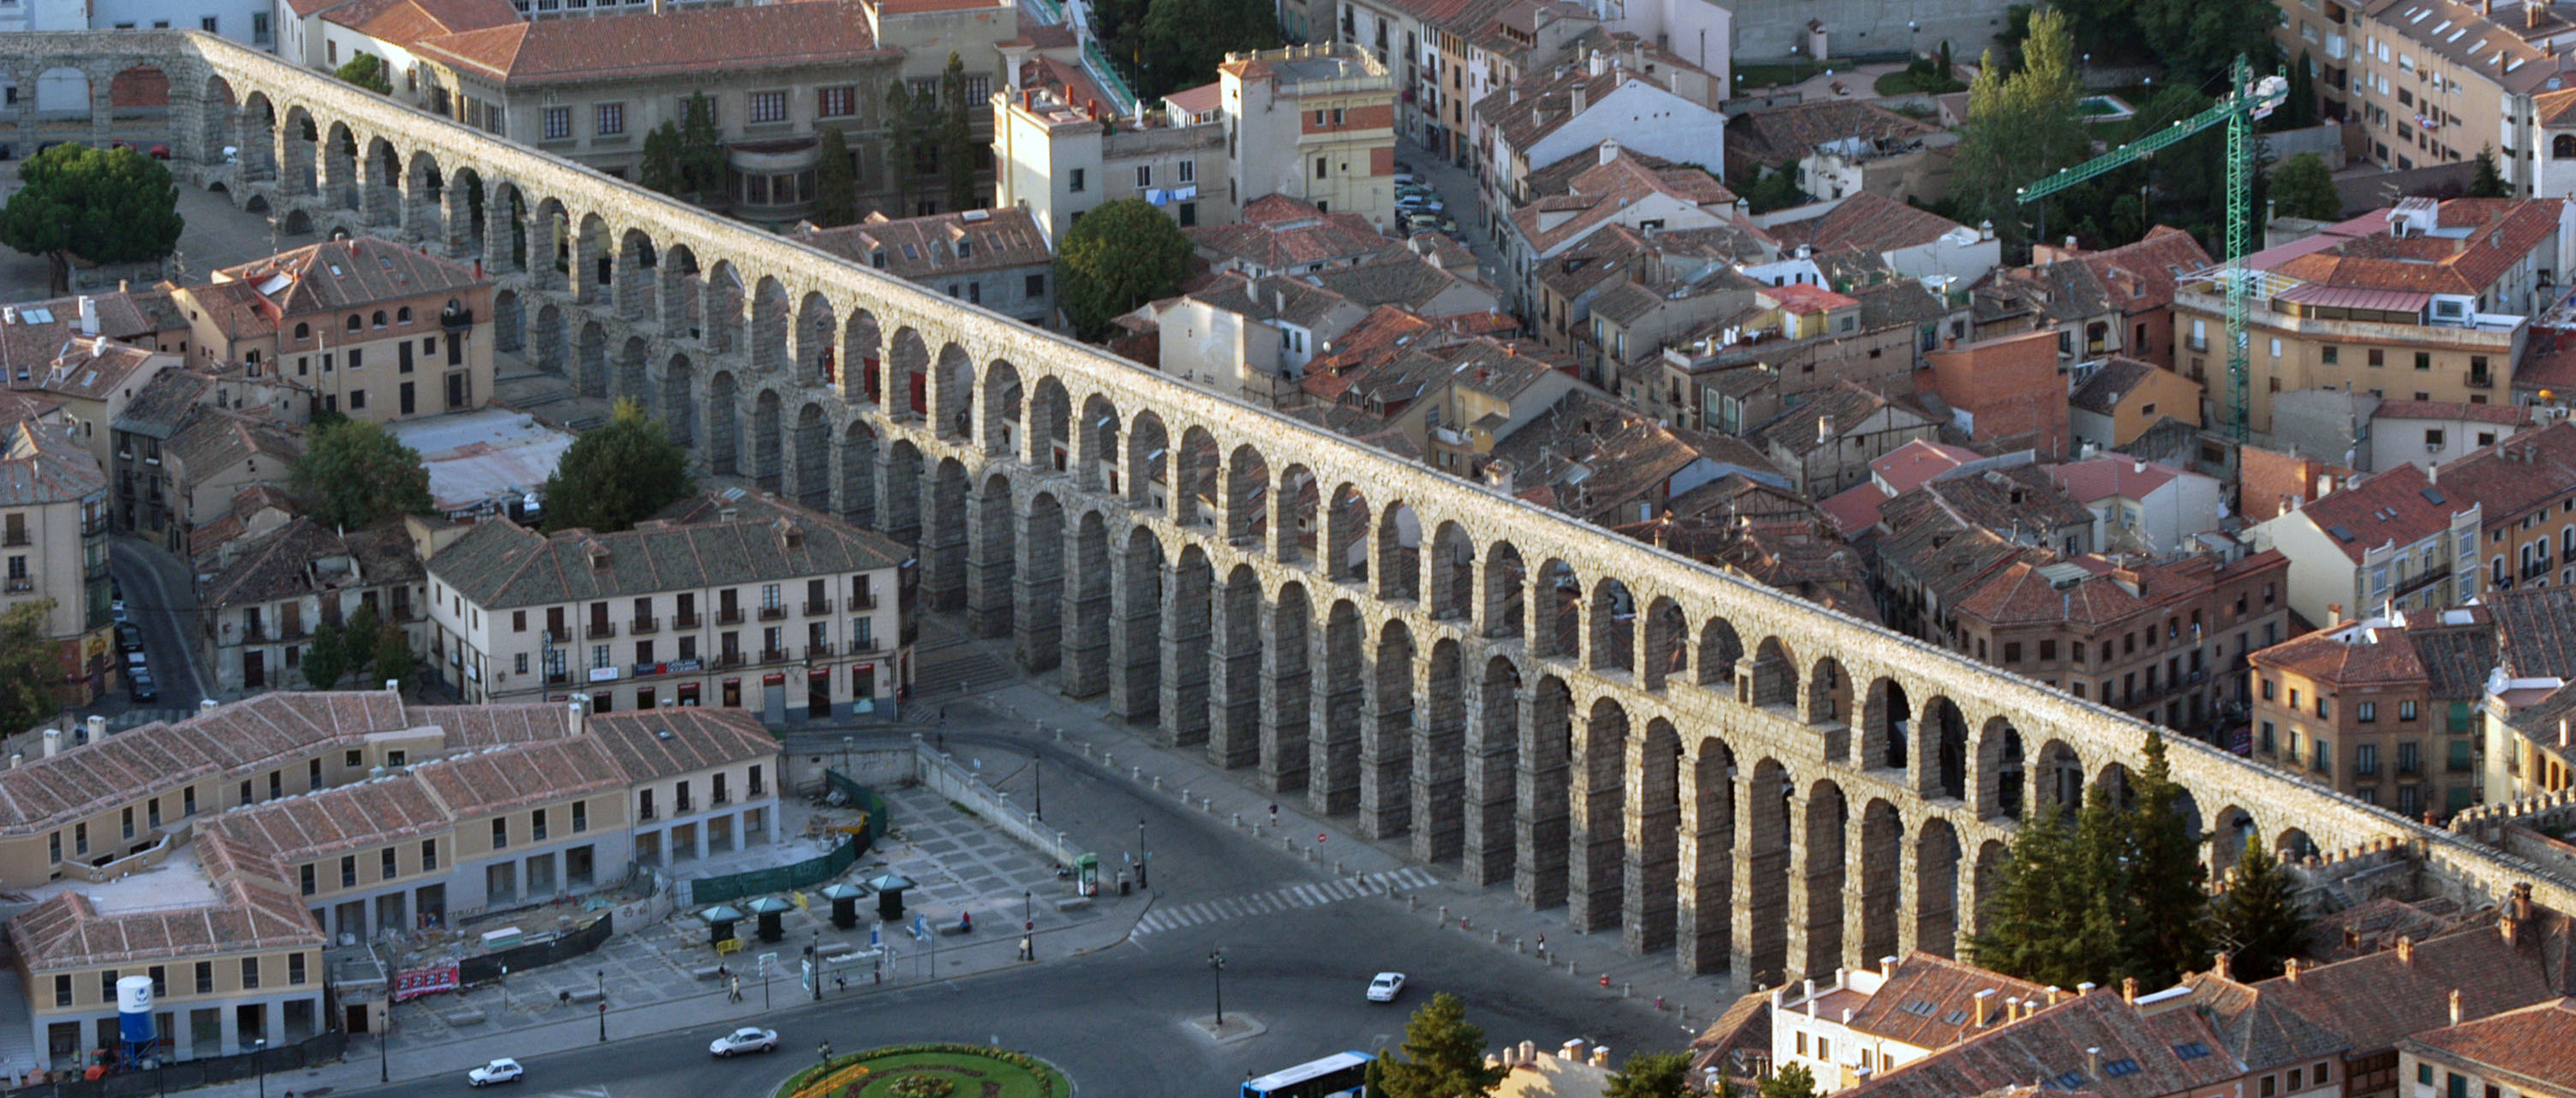 Acueducto-de-Segovia.jpg